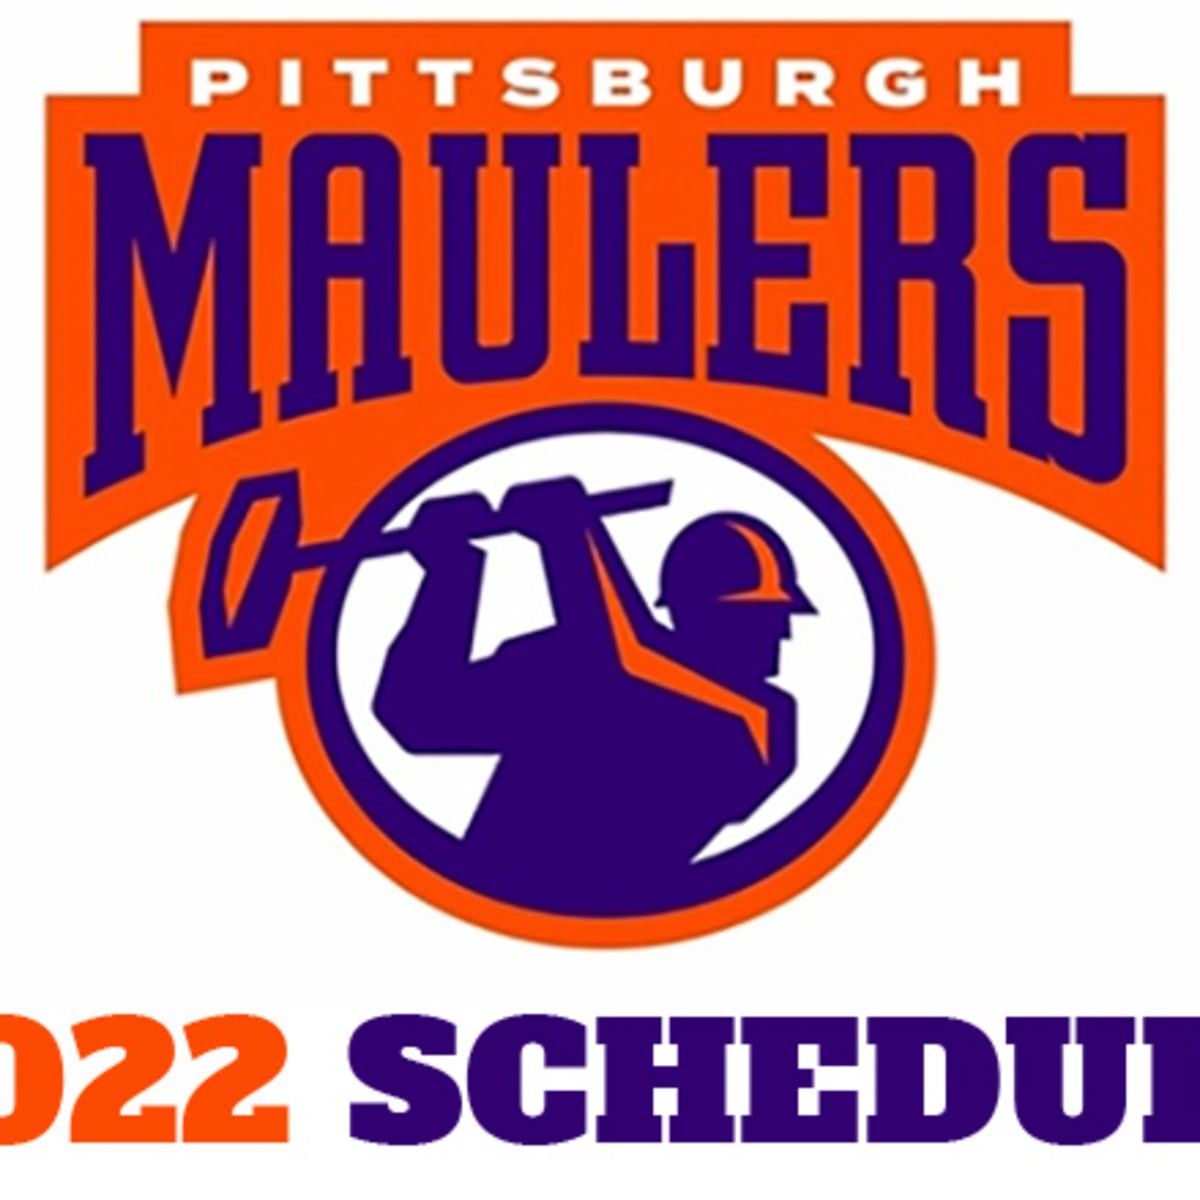 Pittsburgh Maulers on X: We got first pitch tonight